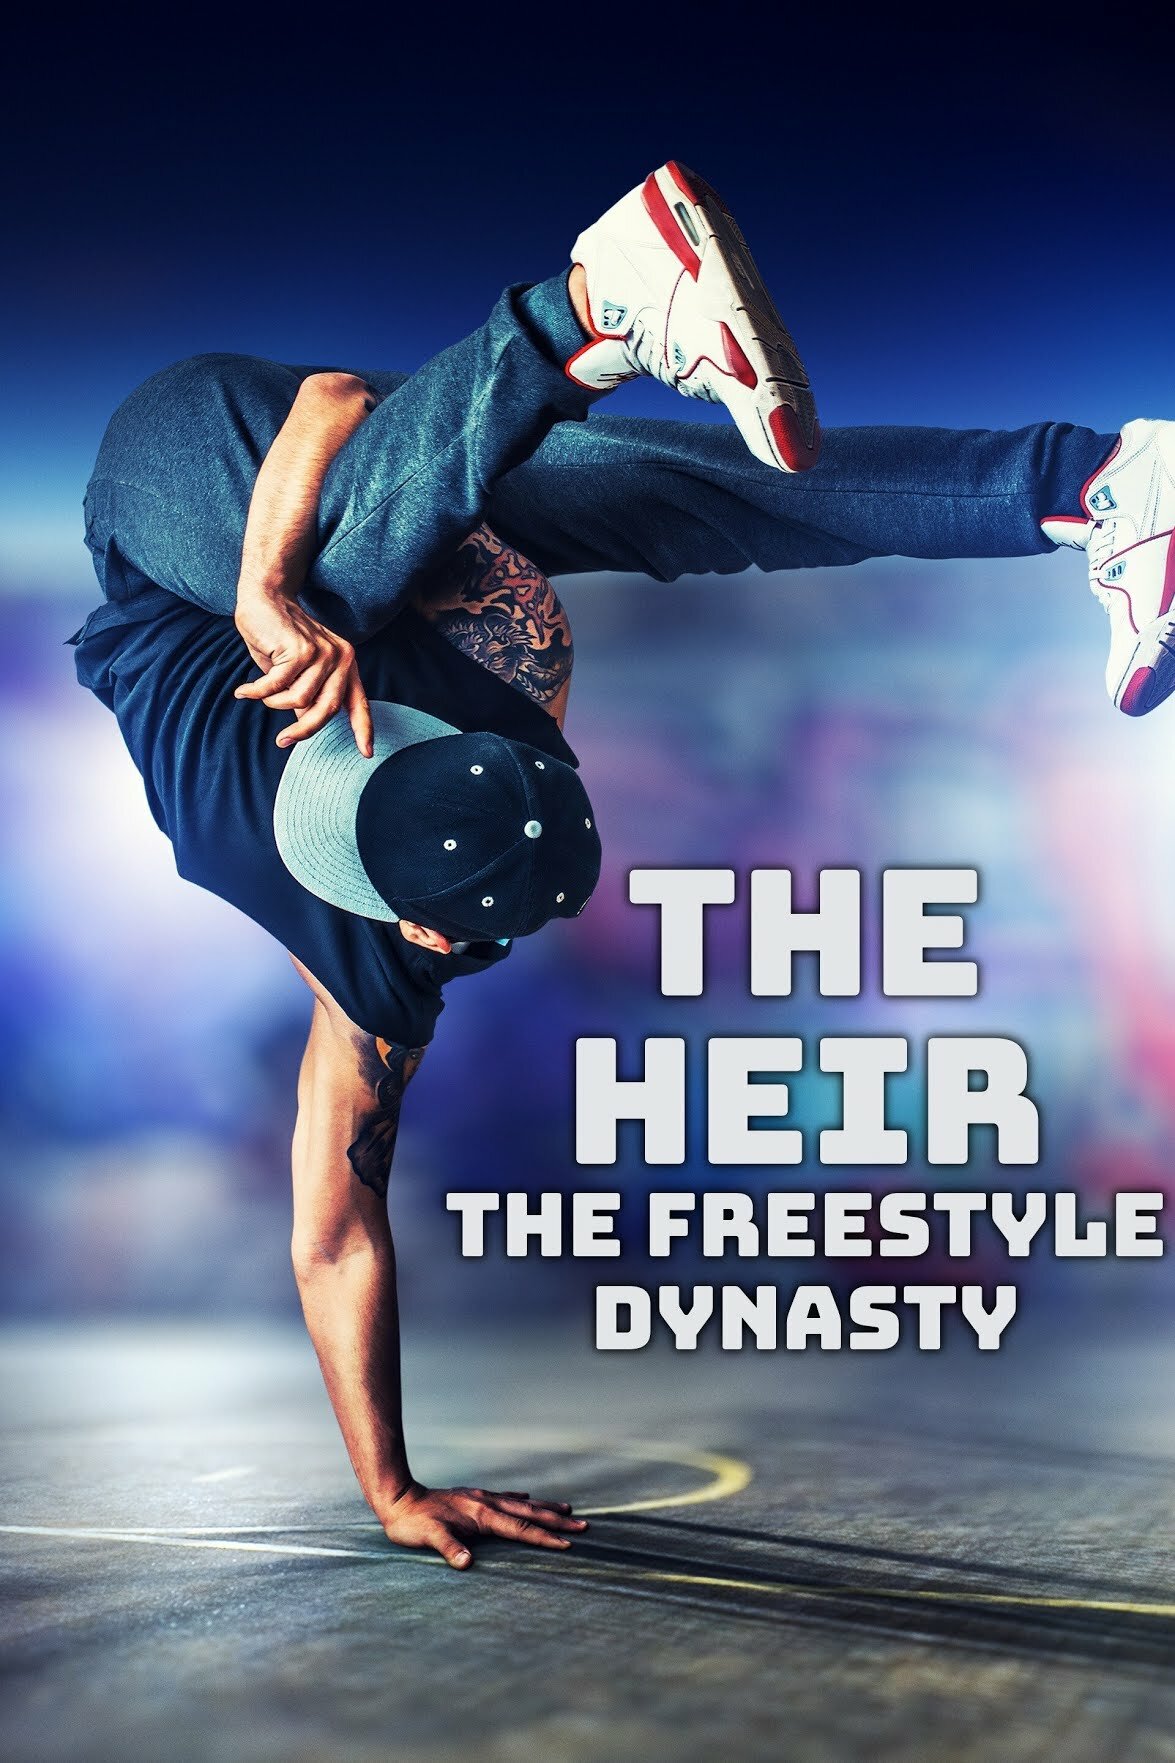 The Heir: The Freestyle Dynasty ne zaman